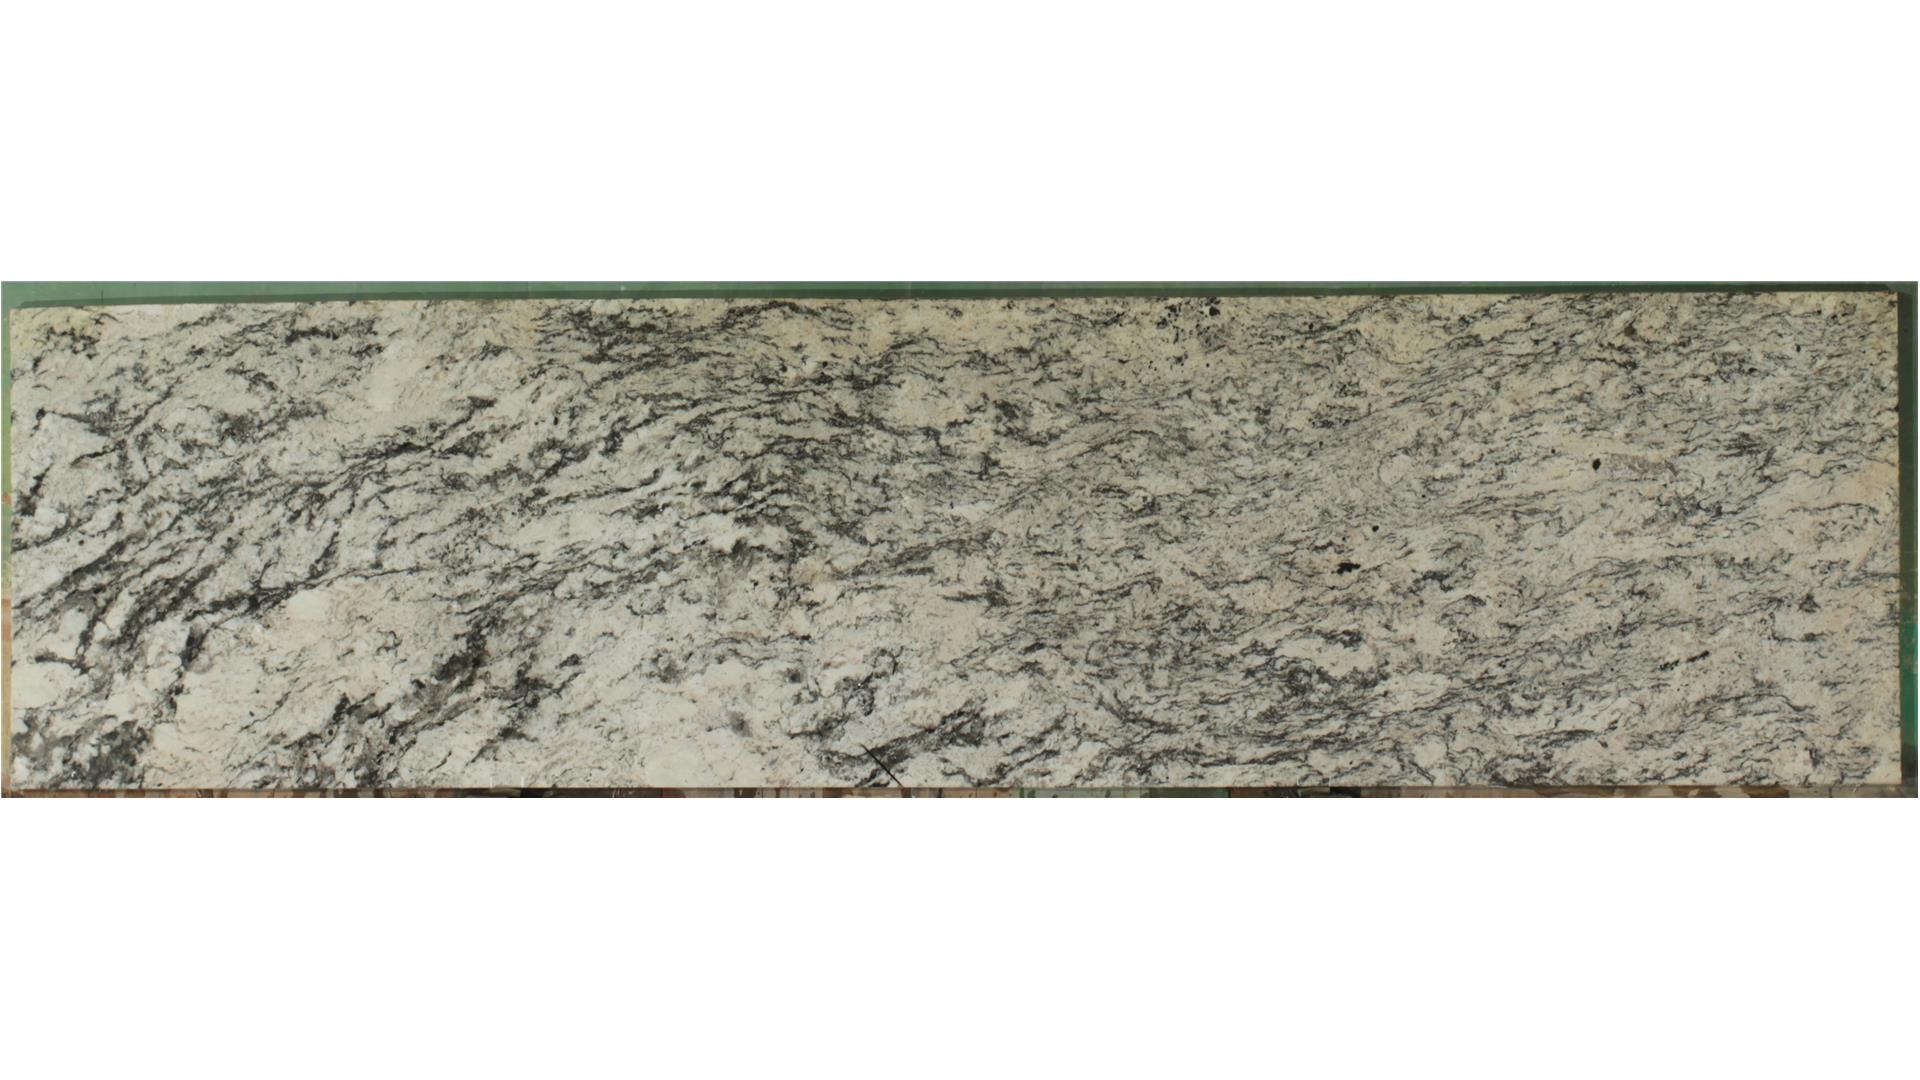 St. Lucia 3 cm DalTile Natural Stone Slabs